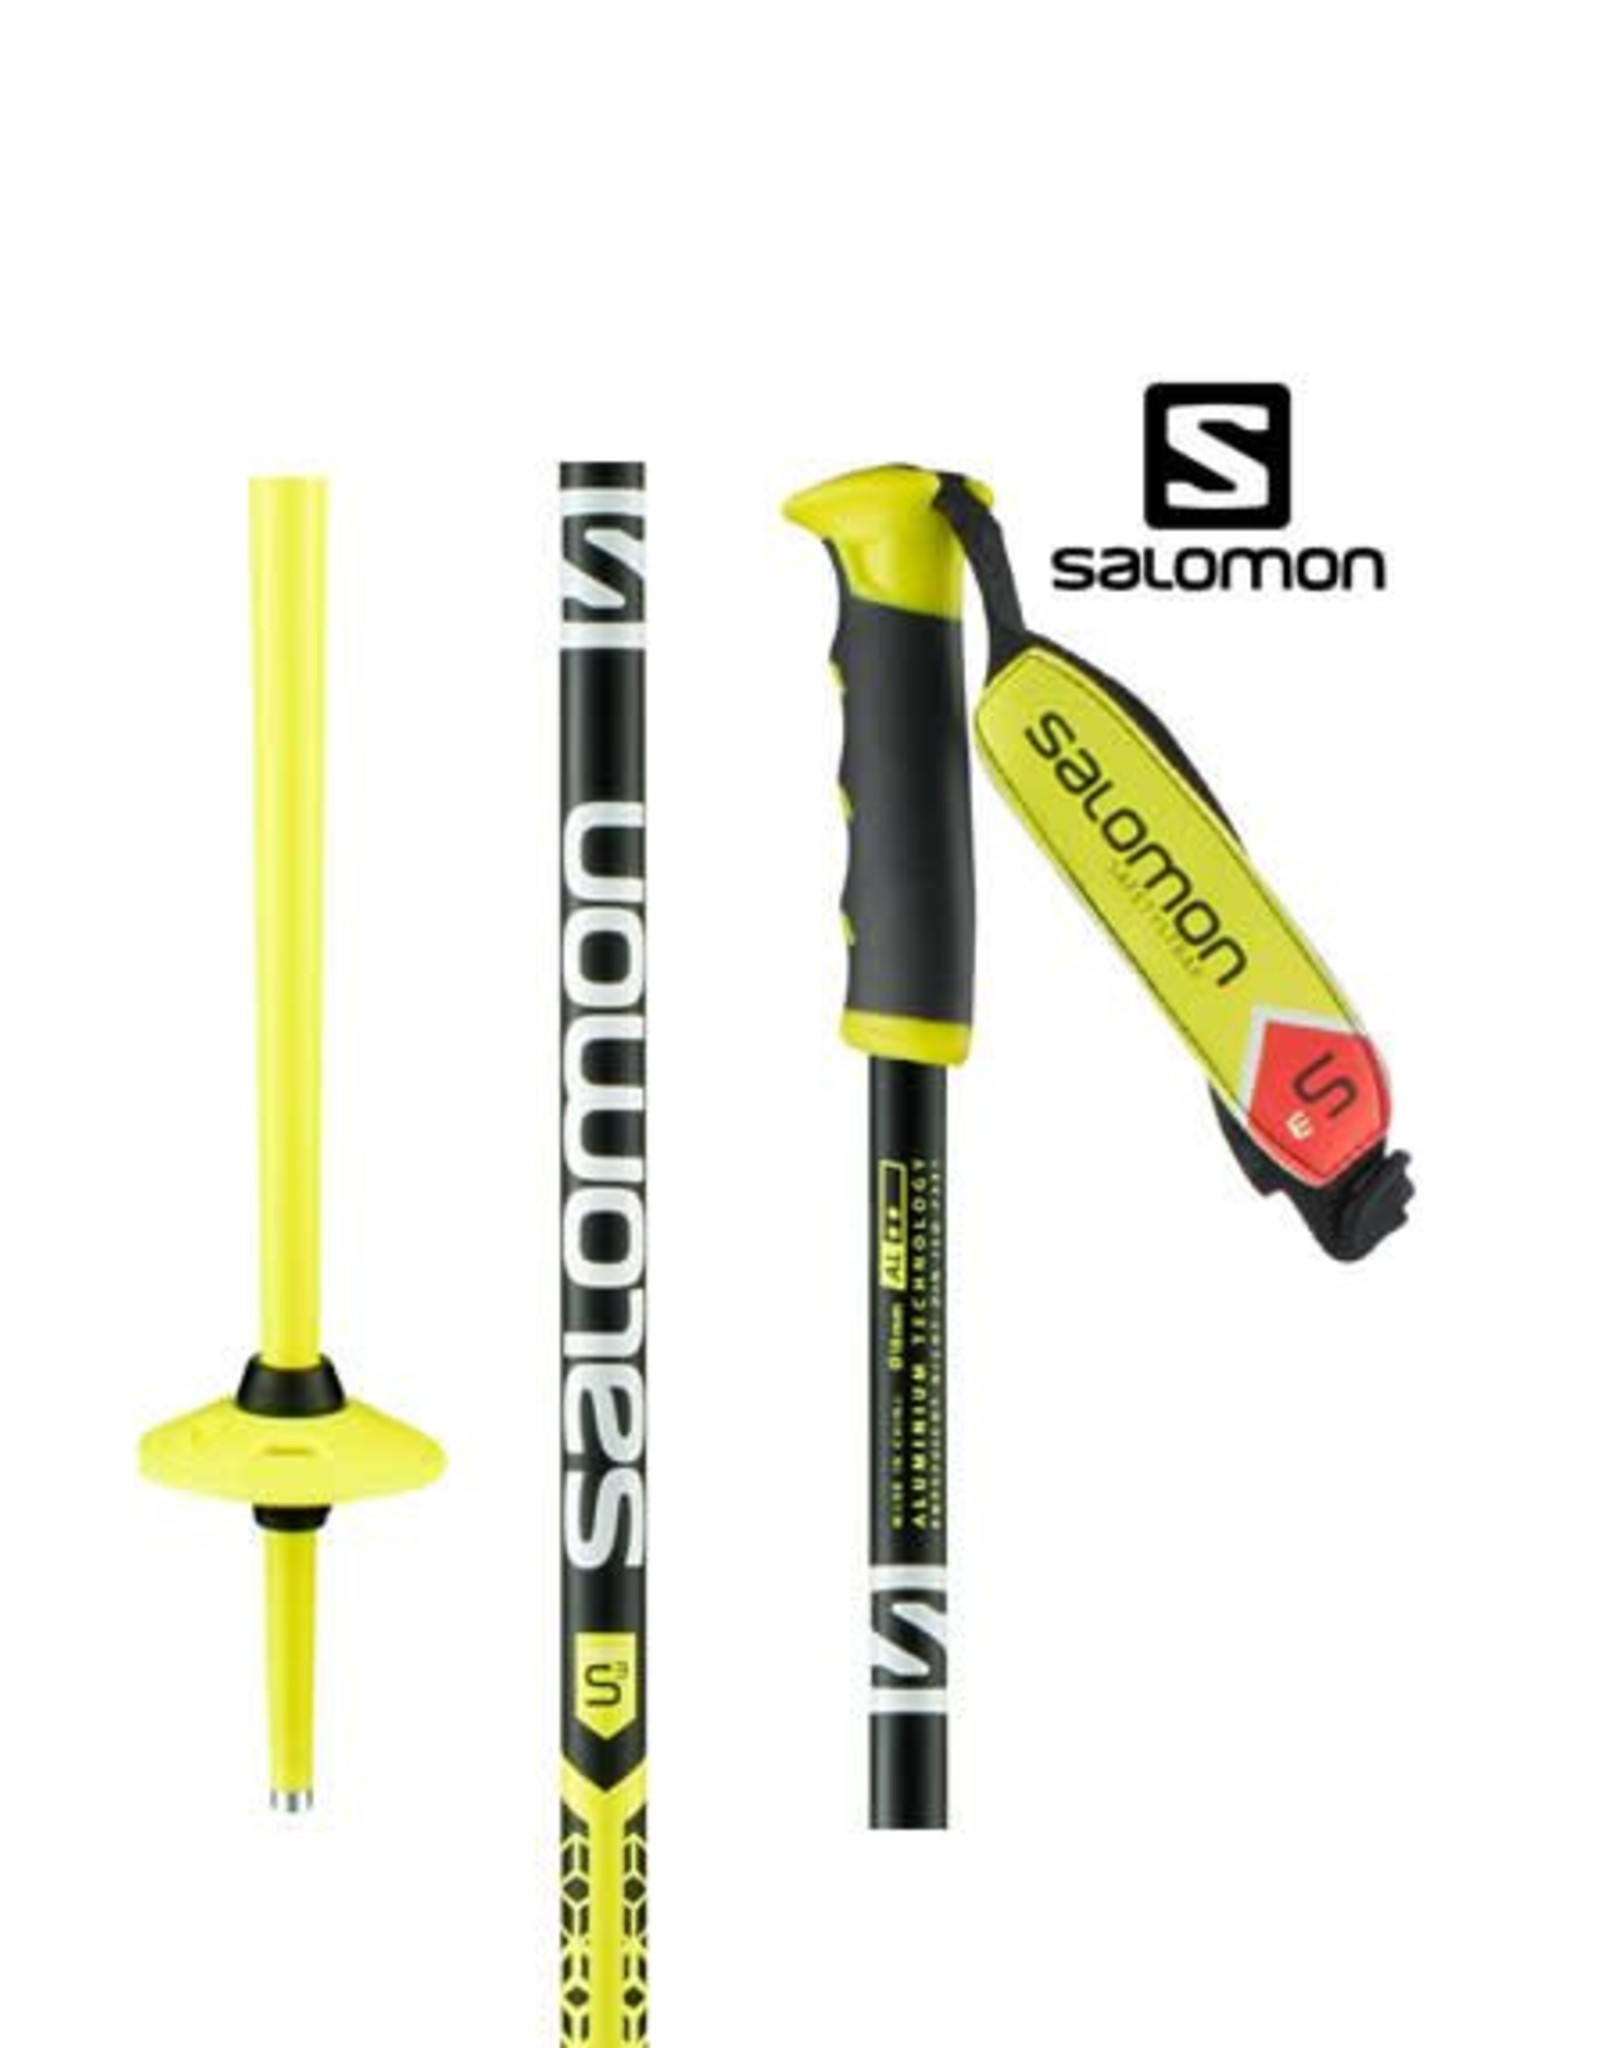 SALOMON SKISTOKKEN SALOMON Arctic S3 Yellow/Black 110cm